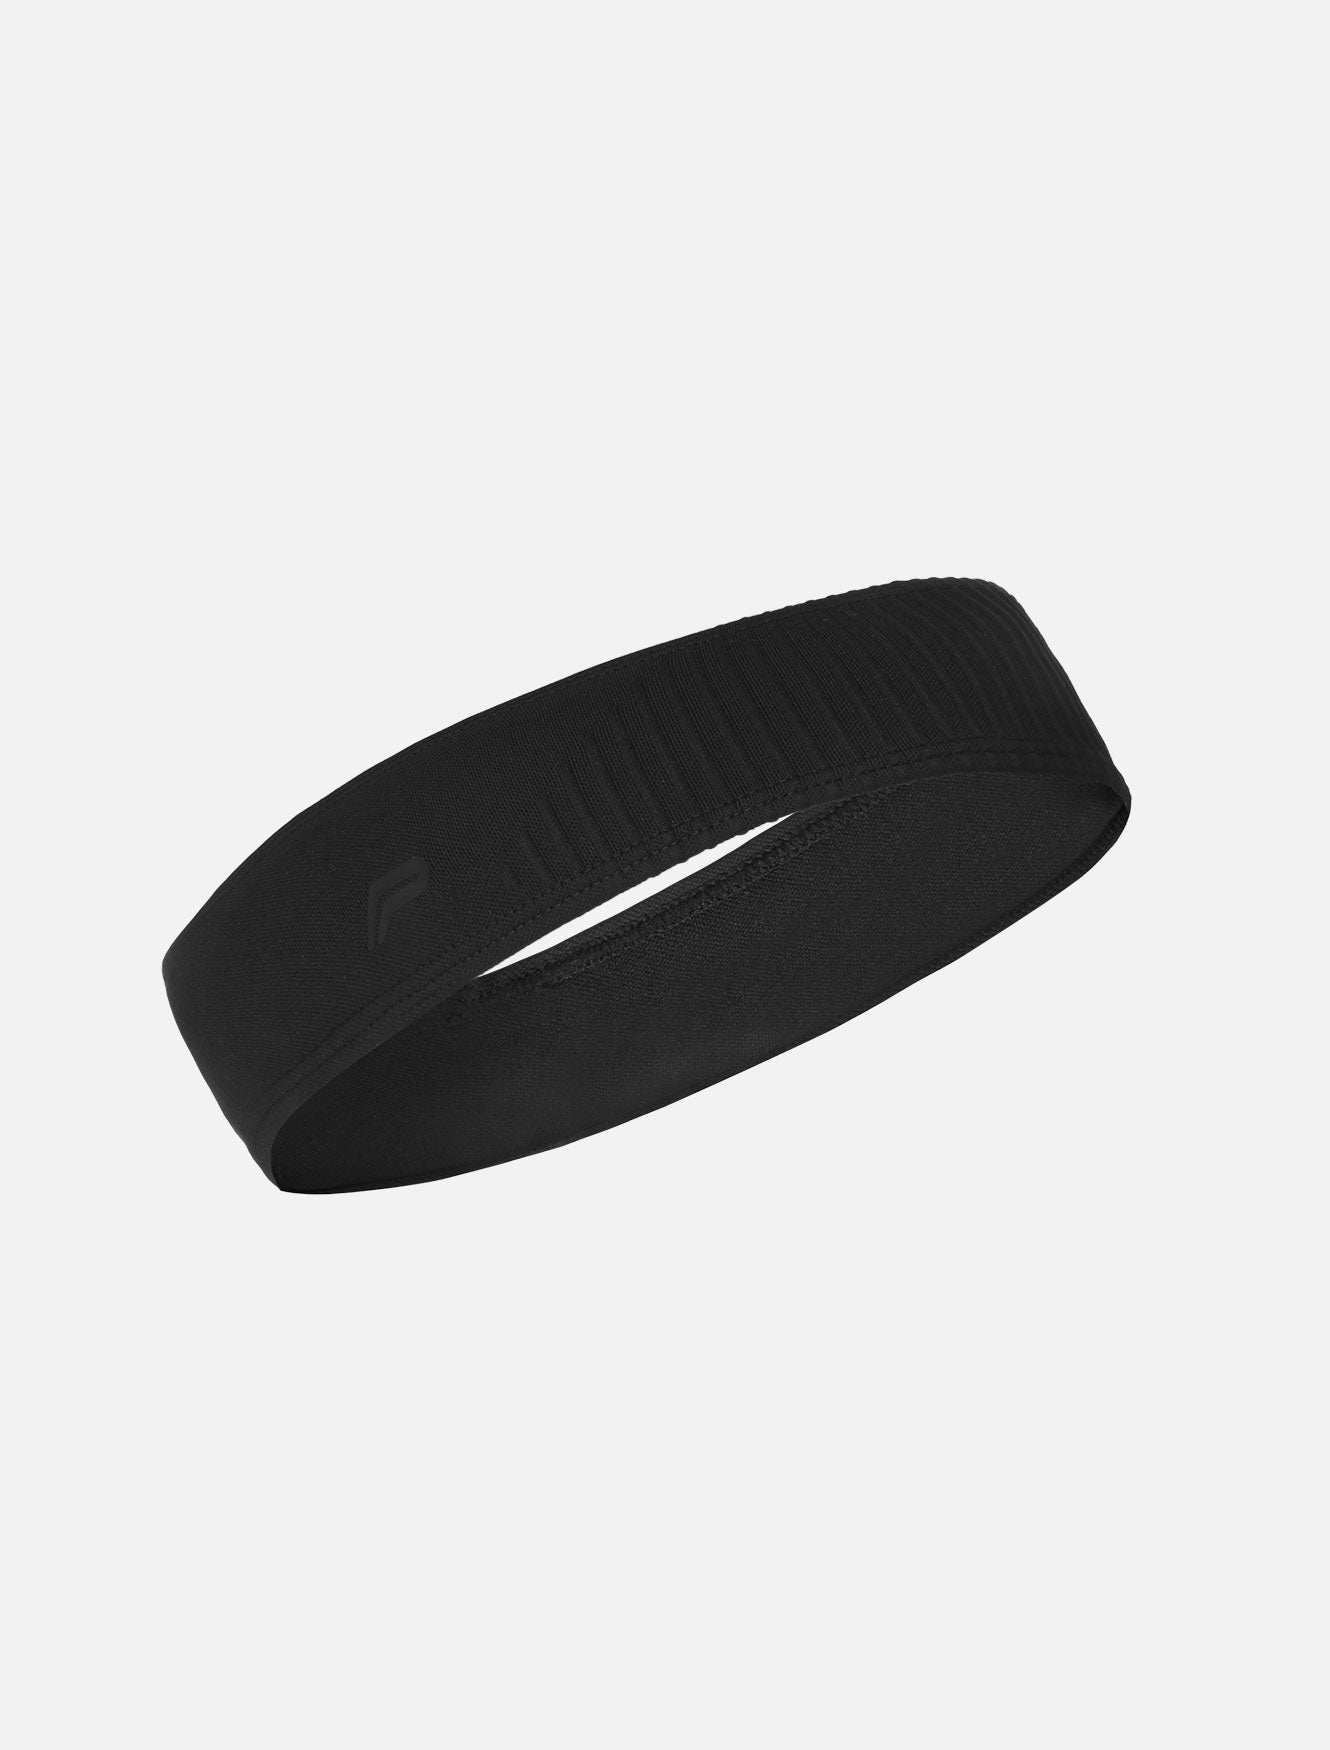 ADAPT Seamless Headband / Blackout Pursue Fitness 1